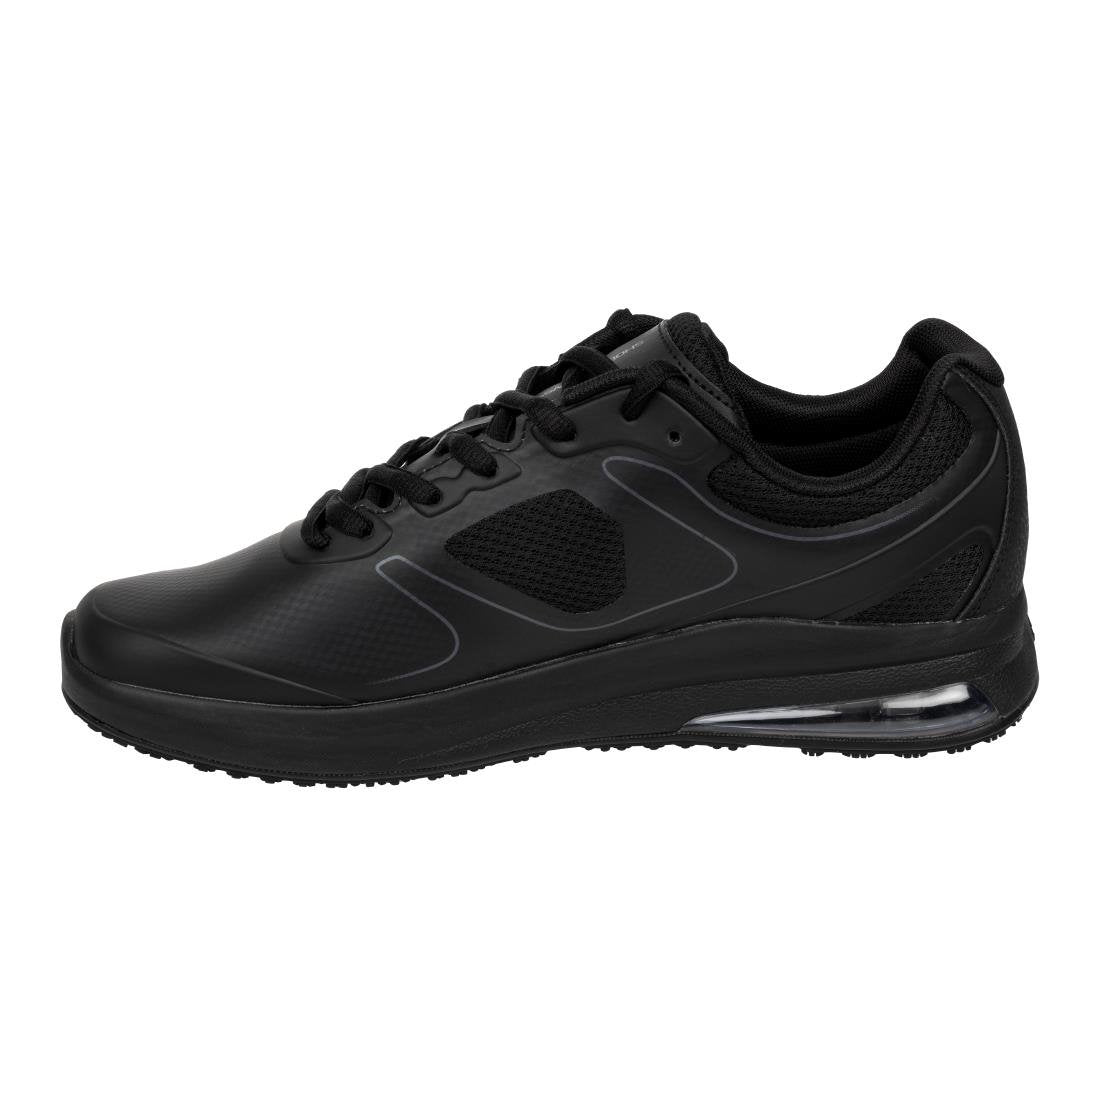 BB586-42 Shoes for Crews Men's Evolution Trainers Black Size 42